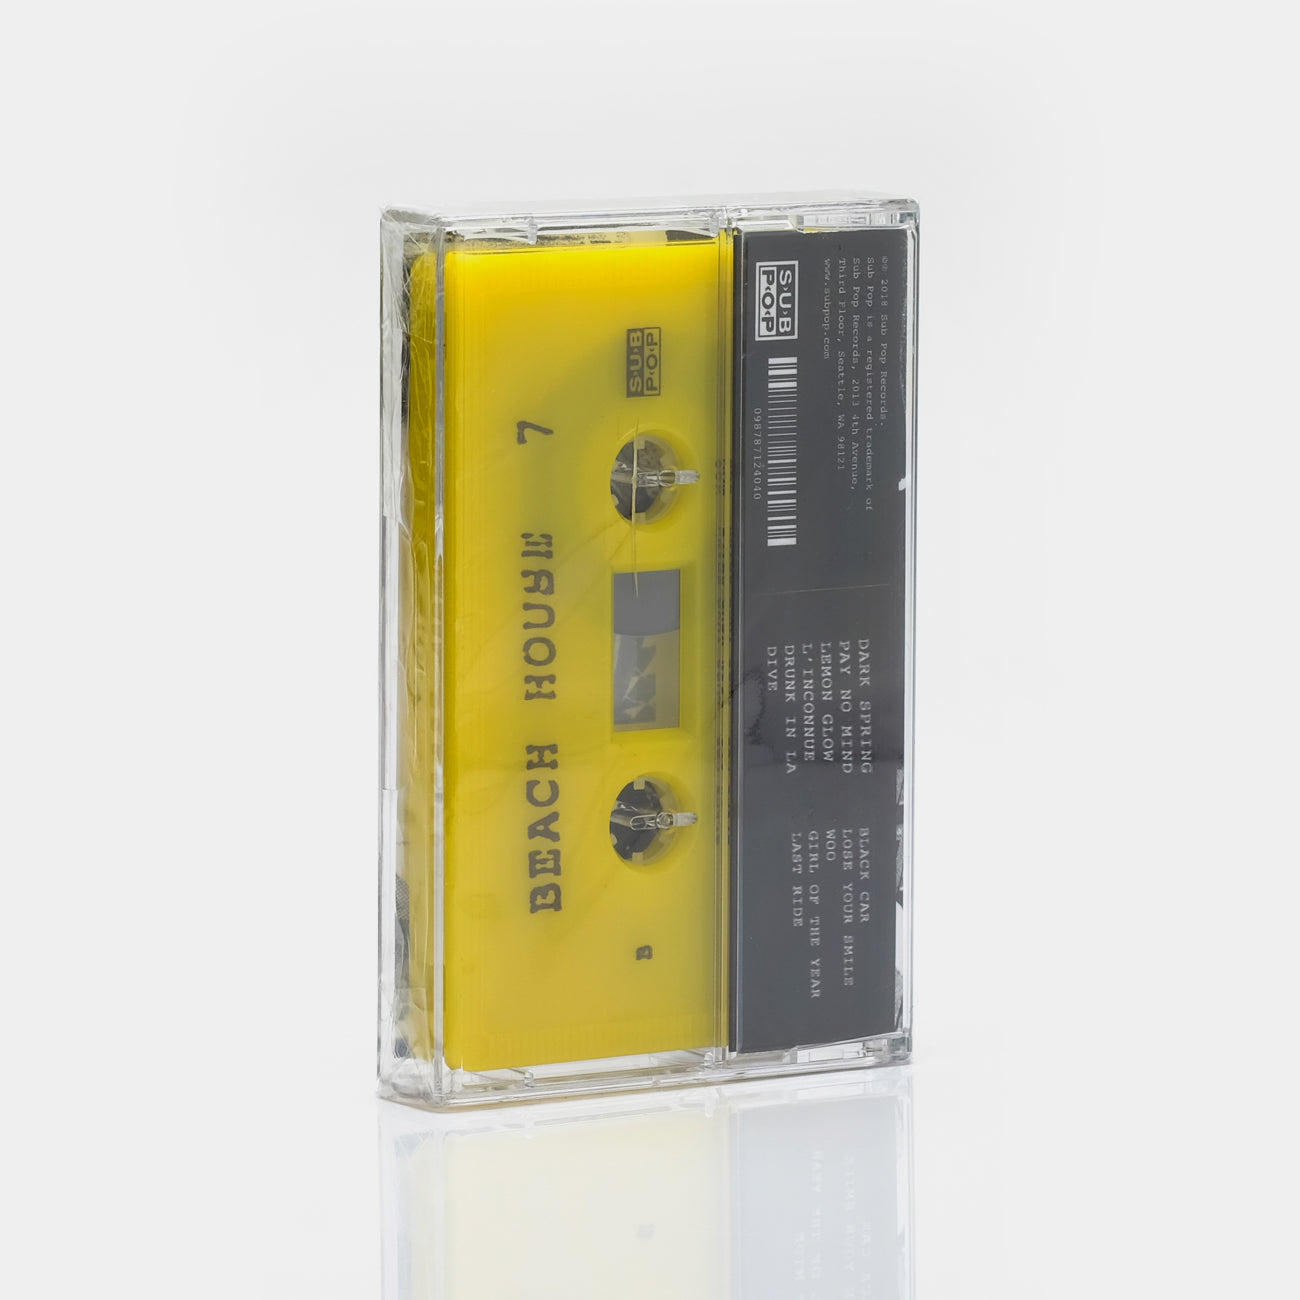 Beach House - 7 Cassette Tape